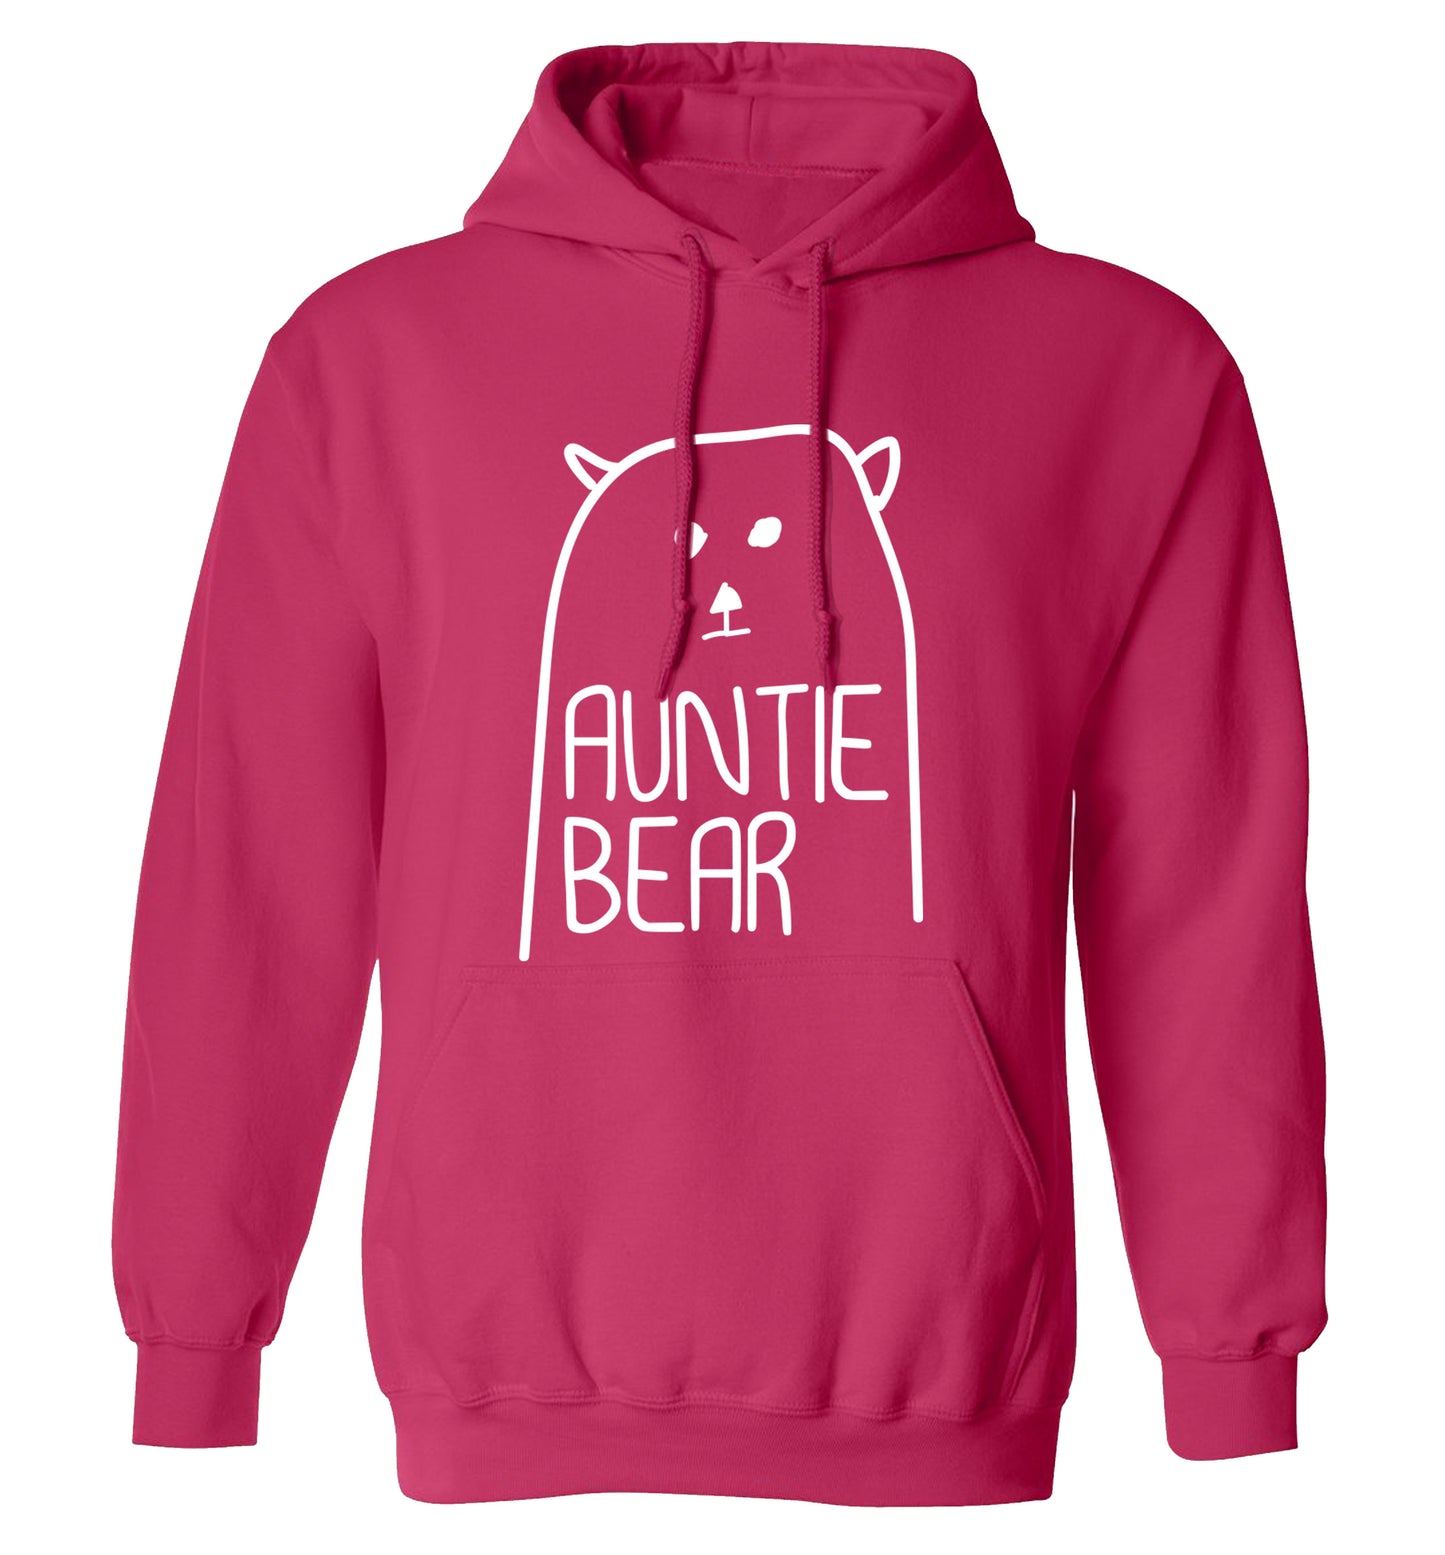 Auntie bear adults unisex pink hoodie 2XL